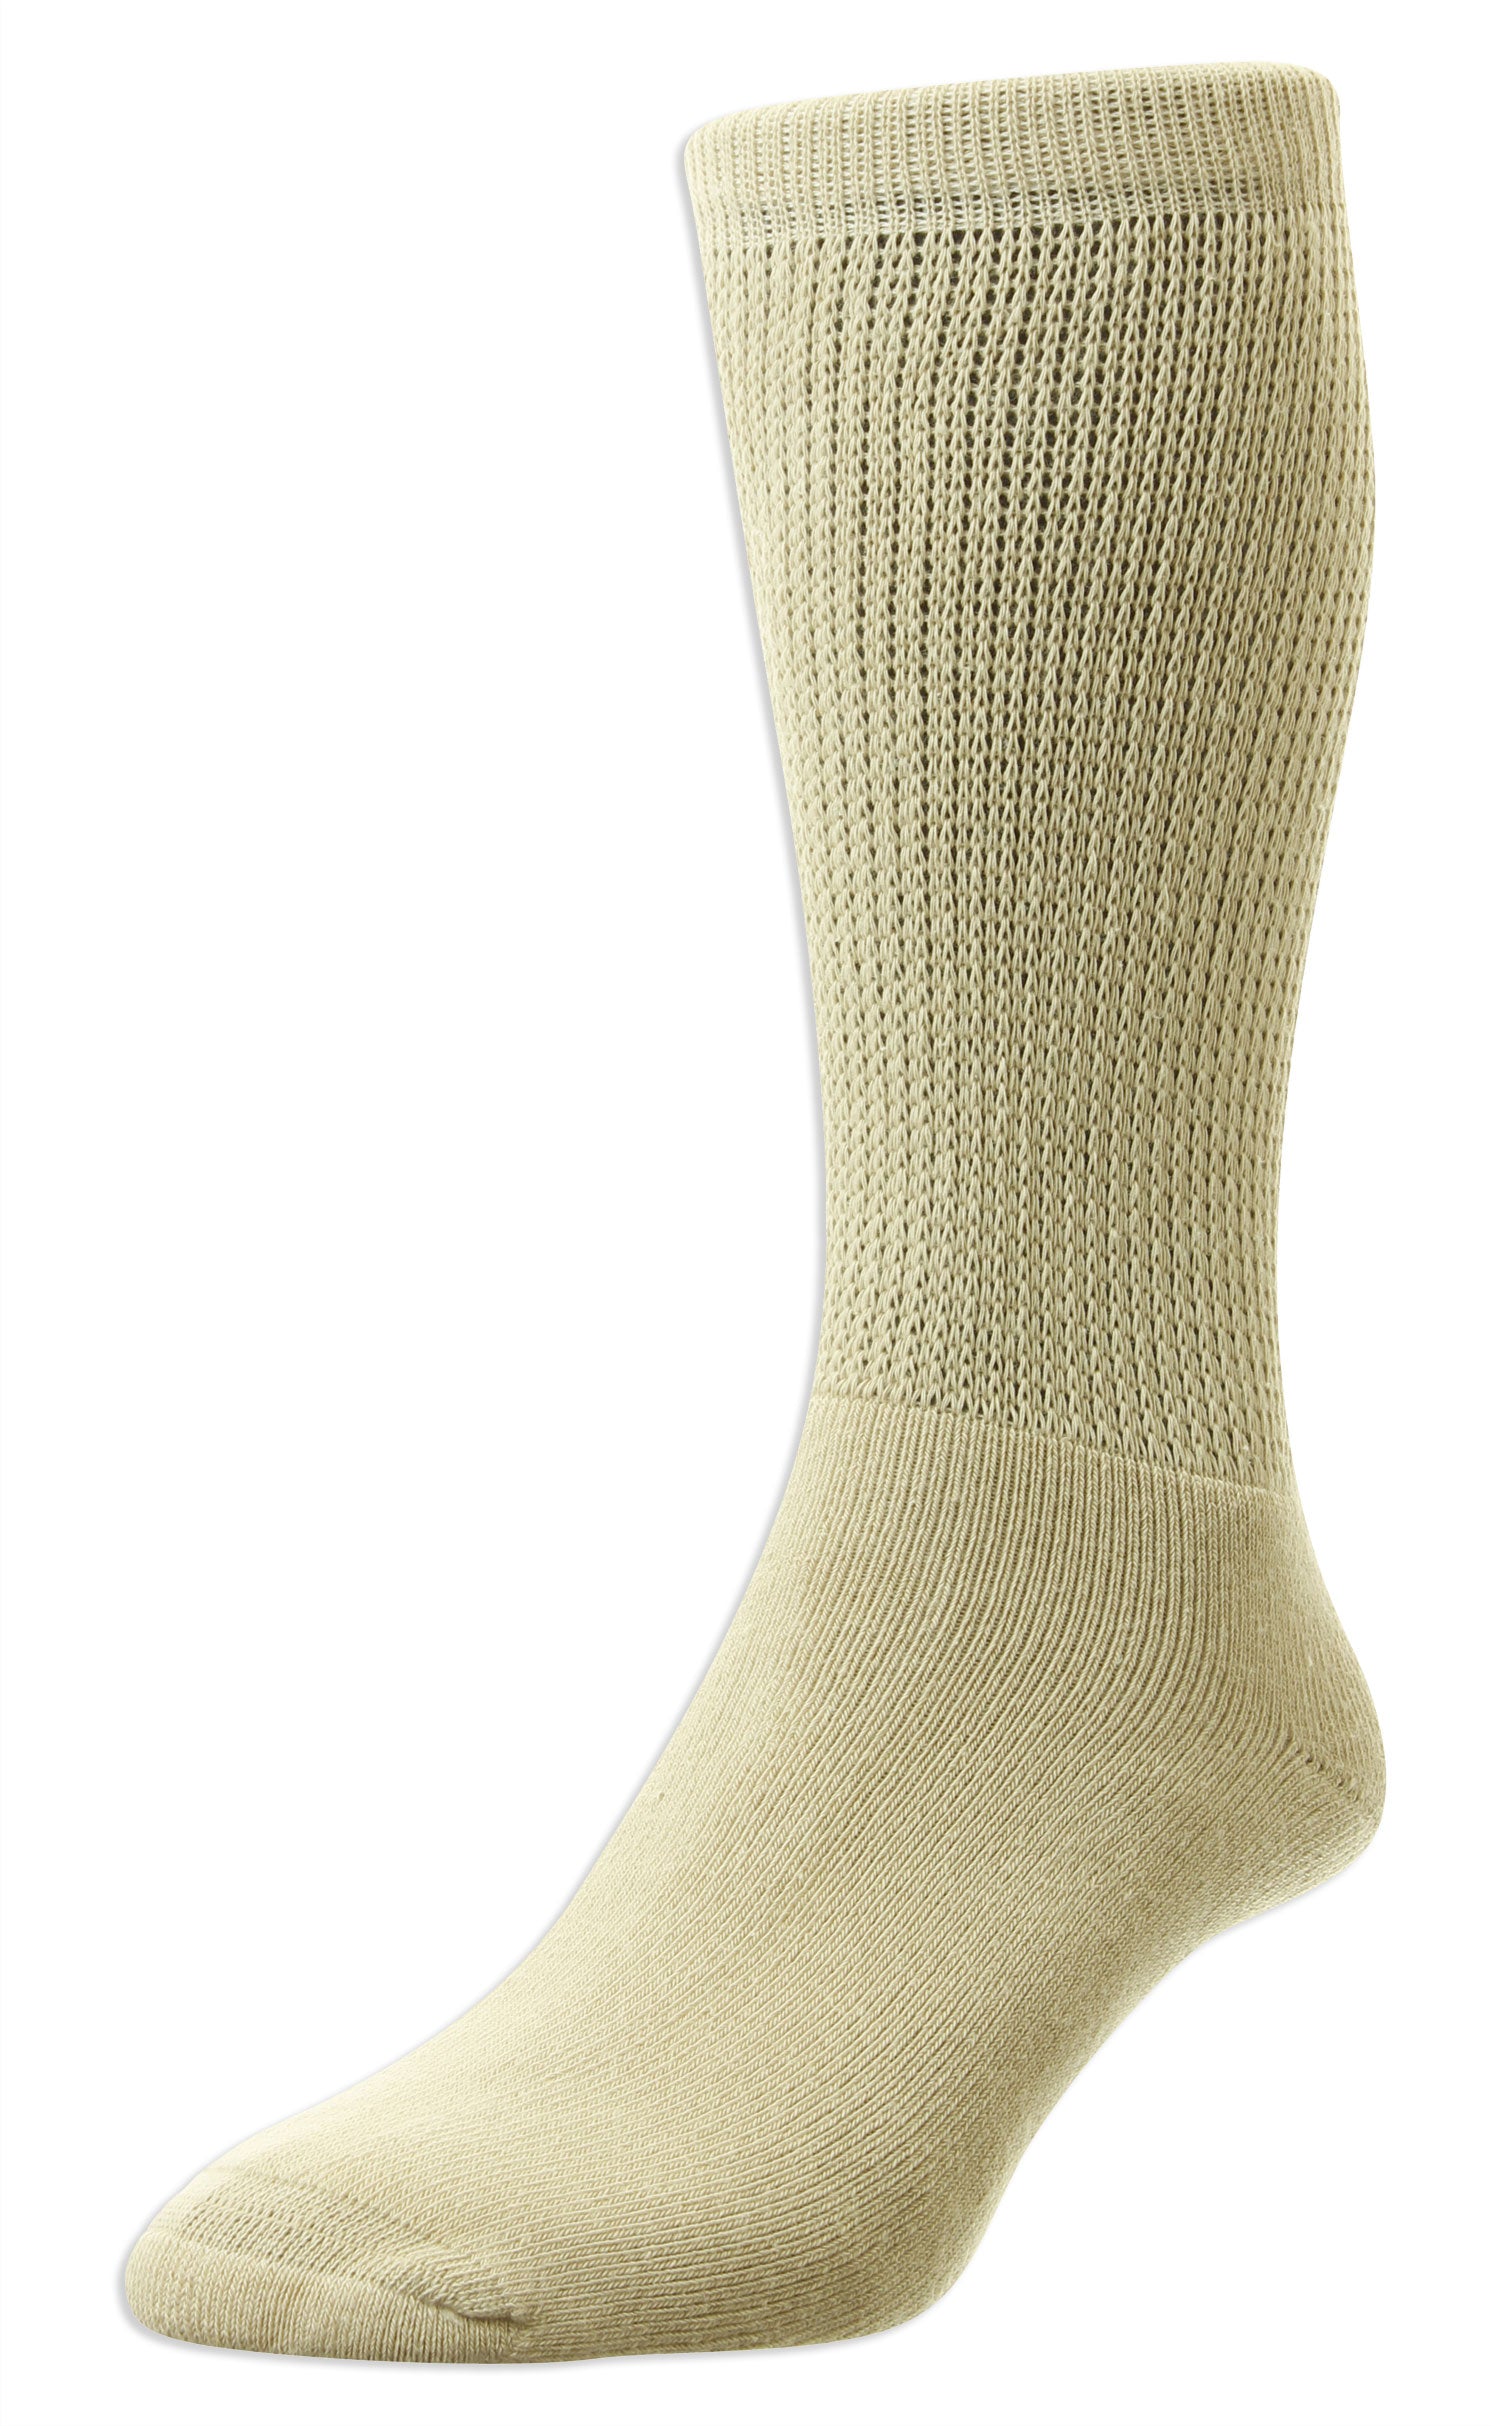 Specialist health socks HJ Hall Diabetic Socks | Cotton 